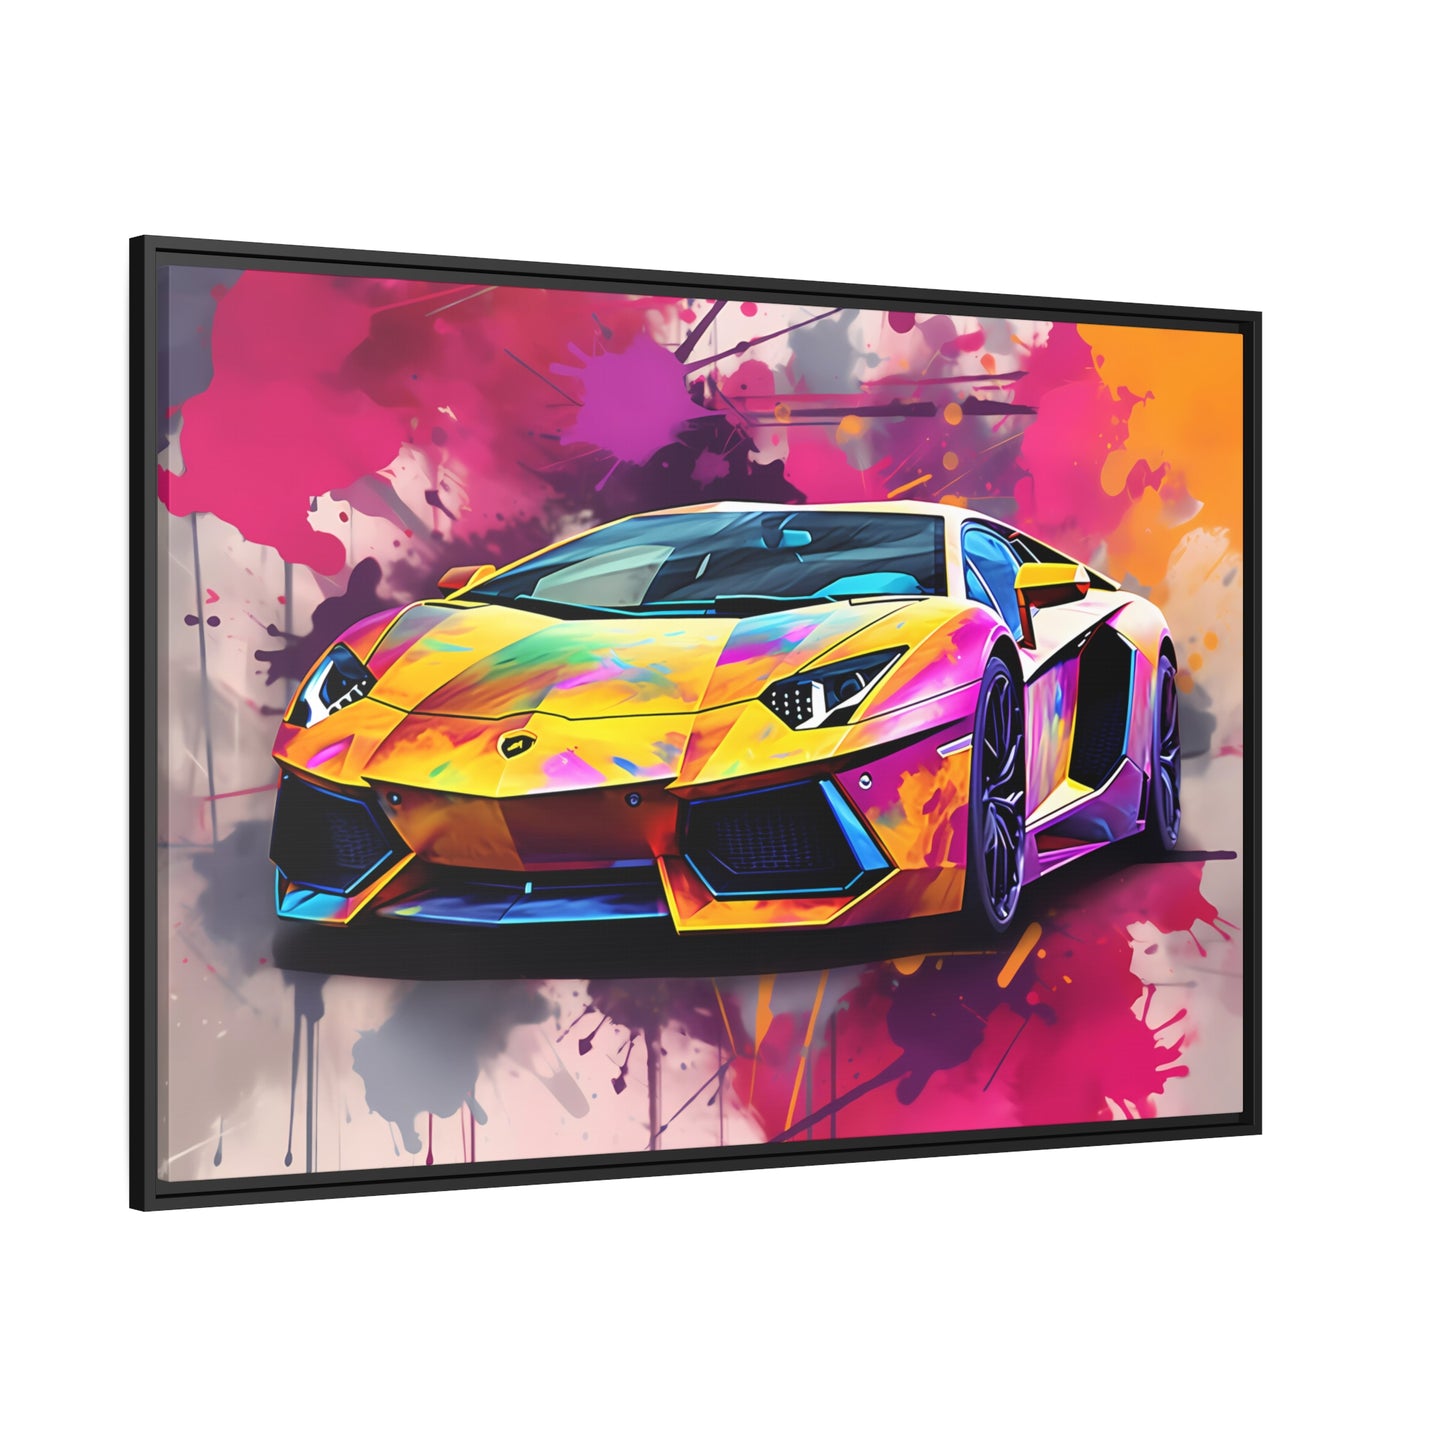 Lamborghini Aventador Sketch